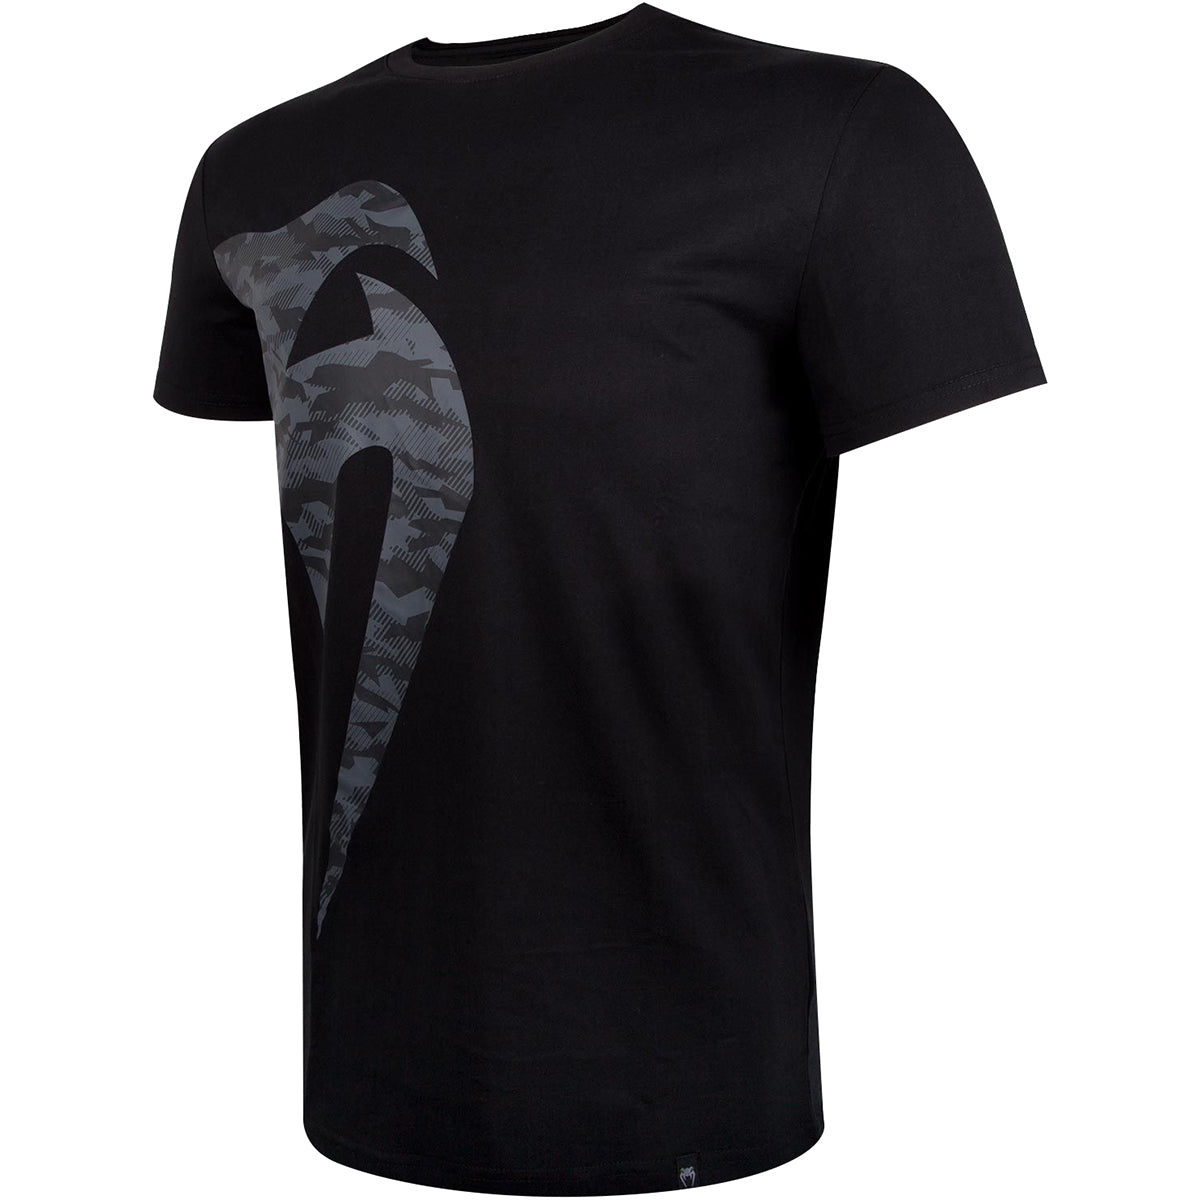 Venum Giant Camo 2.0 Short Sleeve T-Shirt - Black/Urban Camo Venum